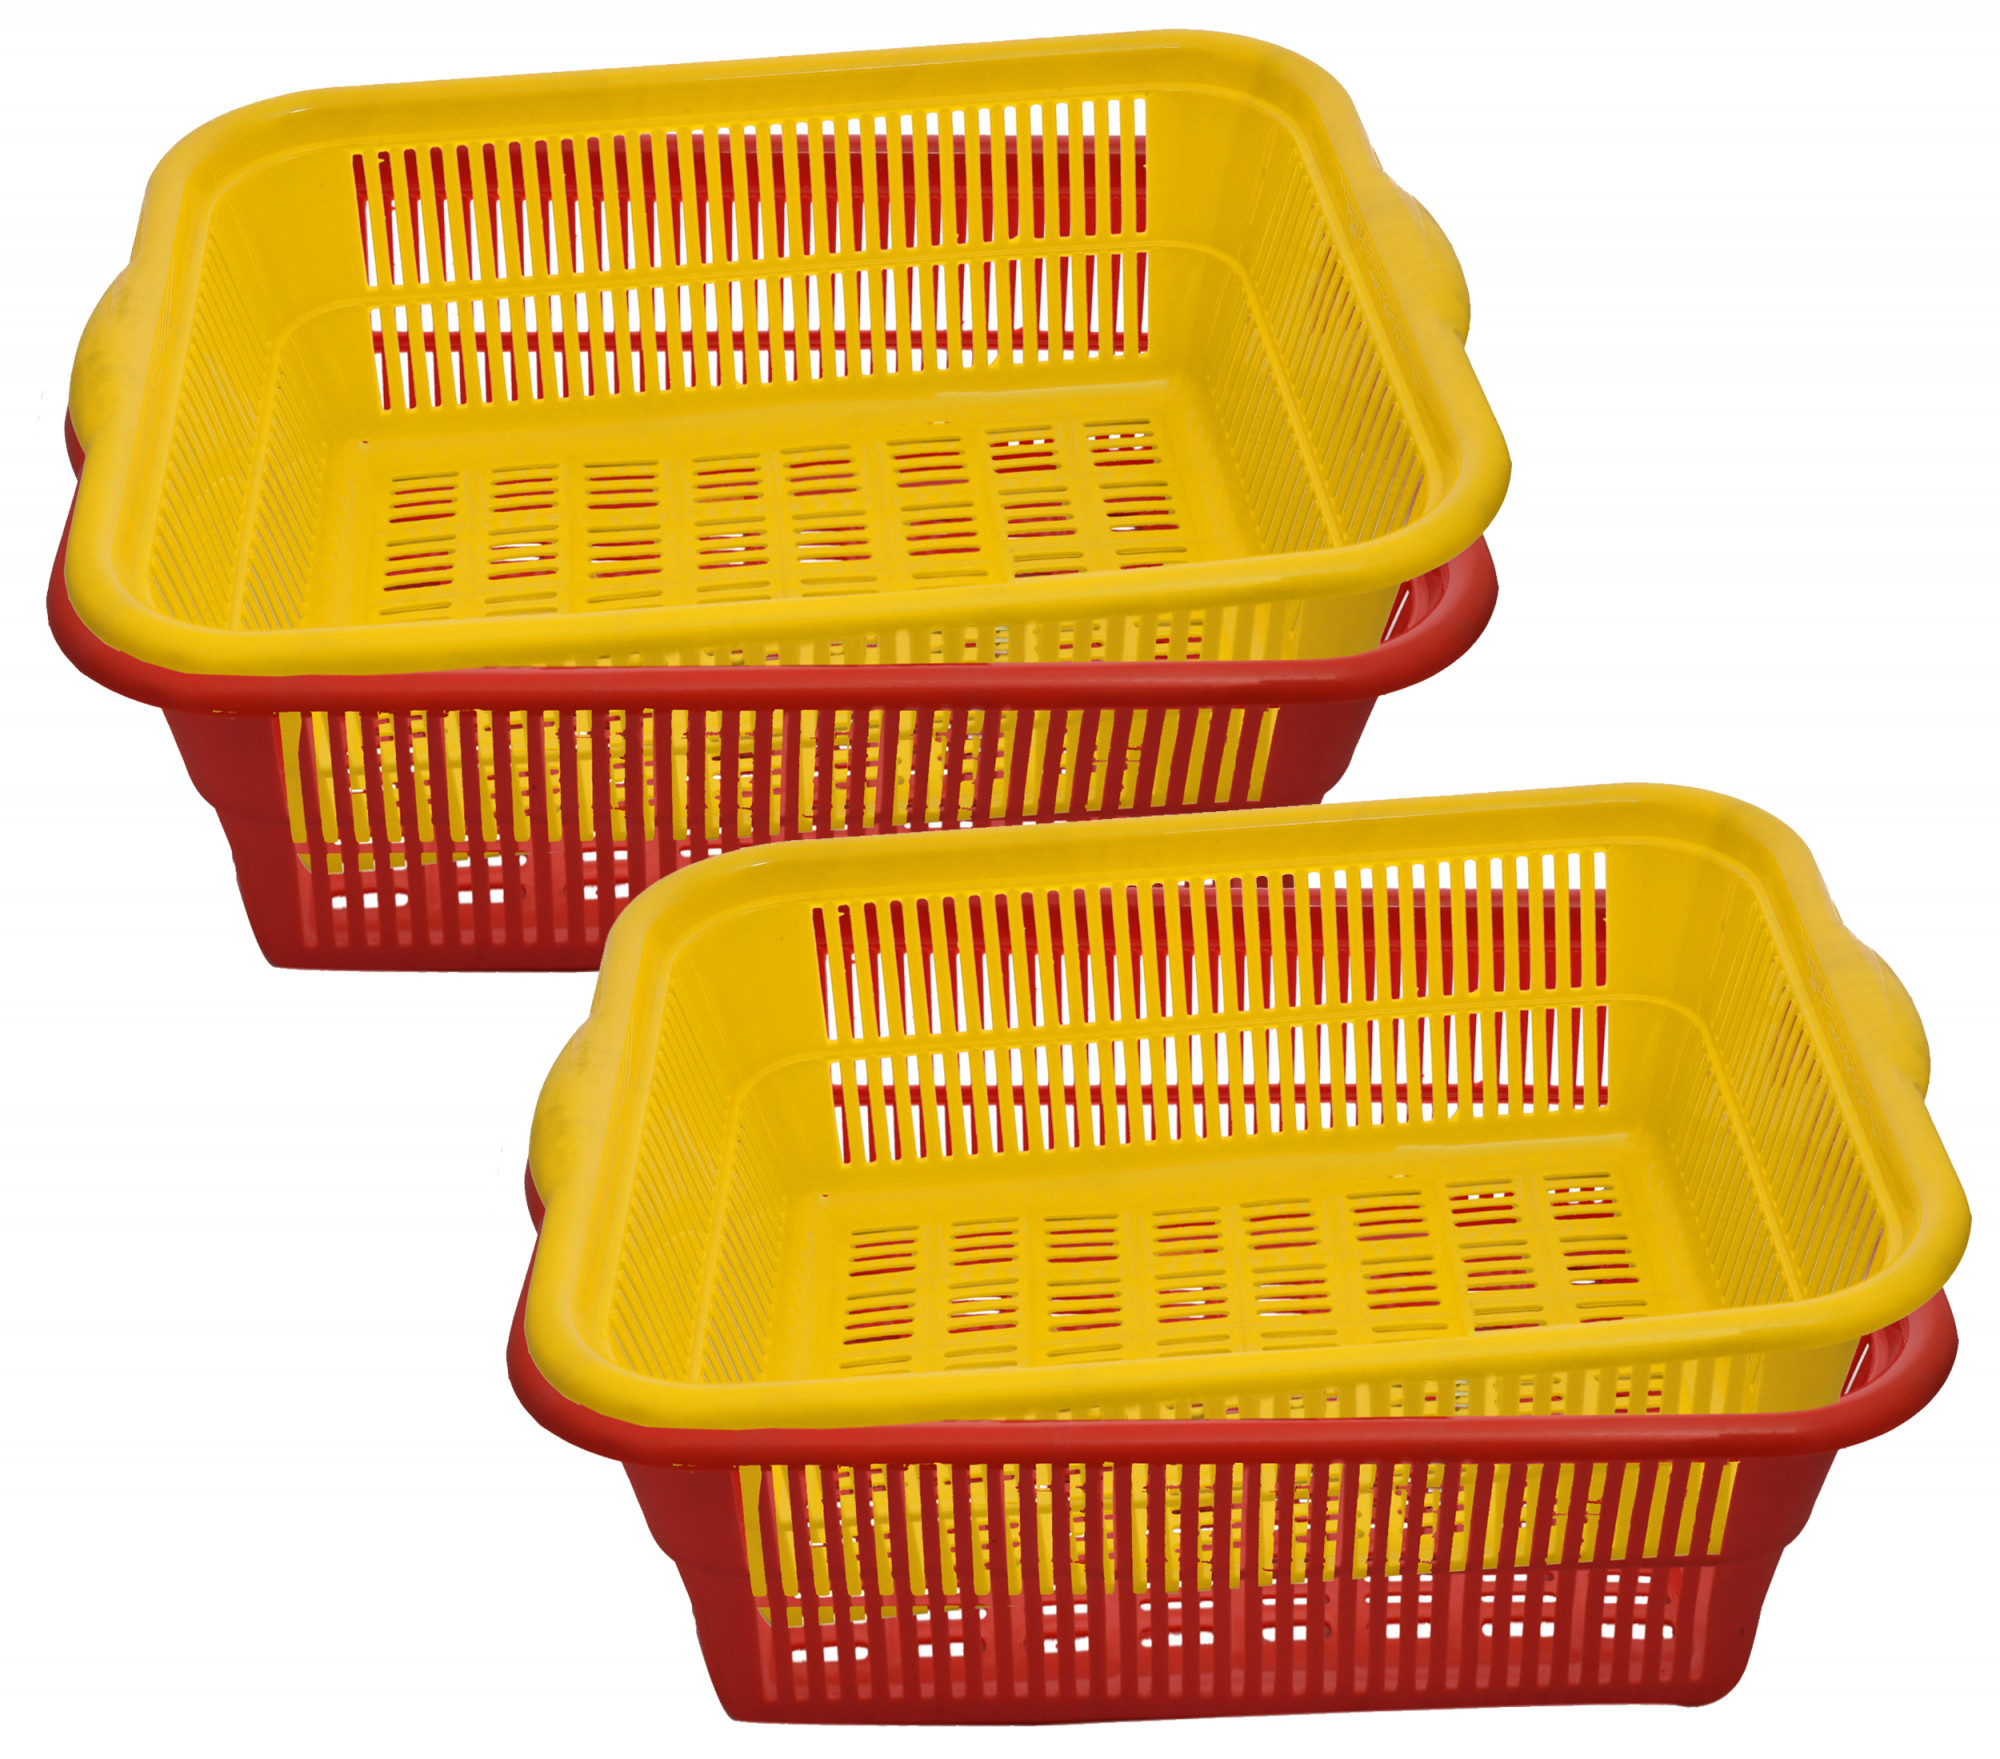 Kuber Industries Plastic Kitchen Small Size Dish Rack Drainer Vegetables And Fruits Washing Basket Dish Rack Multipurpose Organizers (Red & Yellow)-KUBMART616